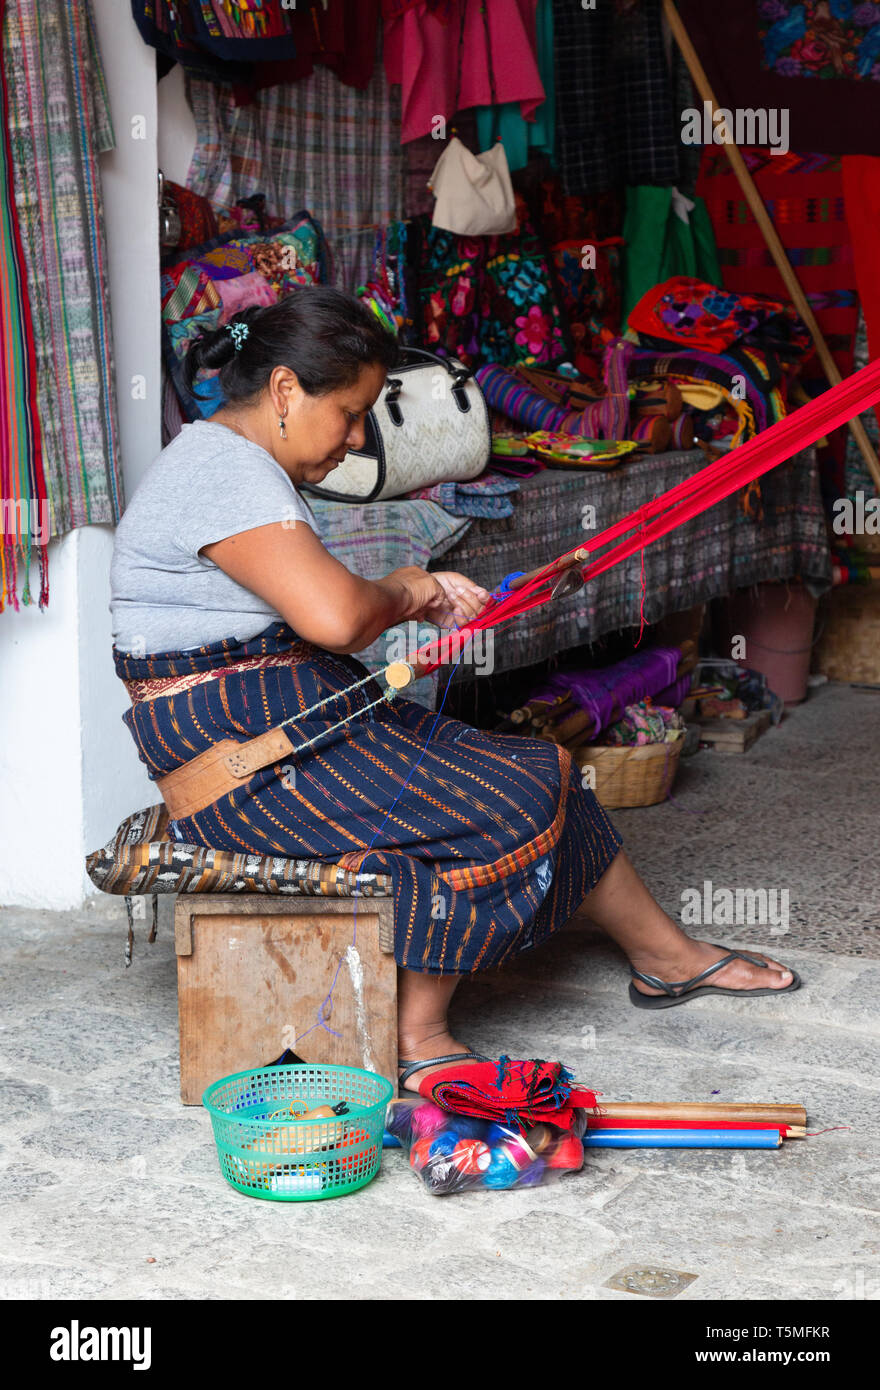 Guatemala lifestyle, local guatemalan woman weaving colorful textiles, Antigua Guatemala Central America Stock Photo